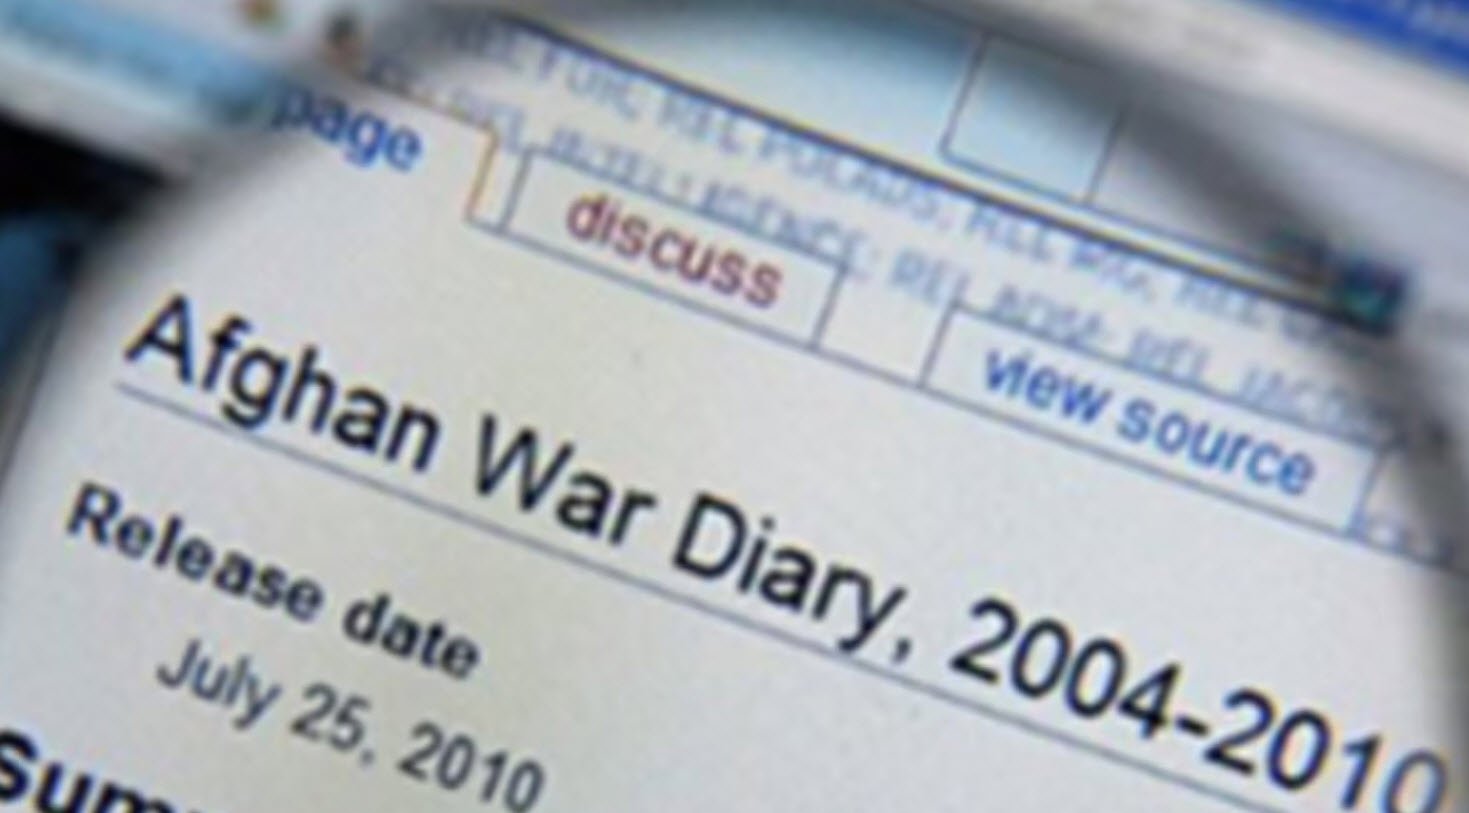 Afghan War Diary (2010)